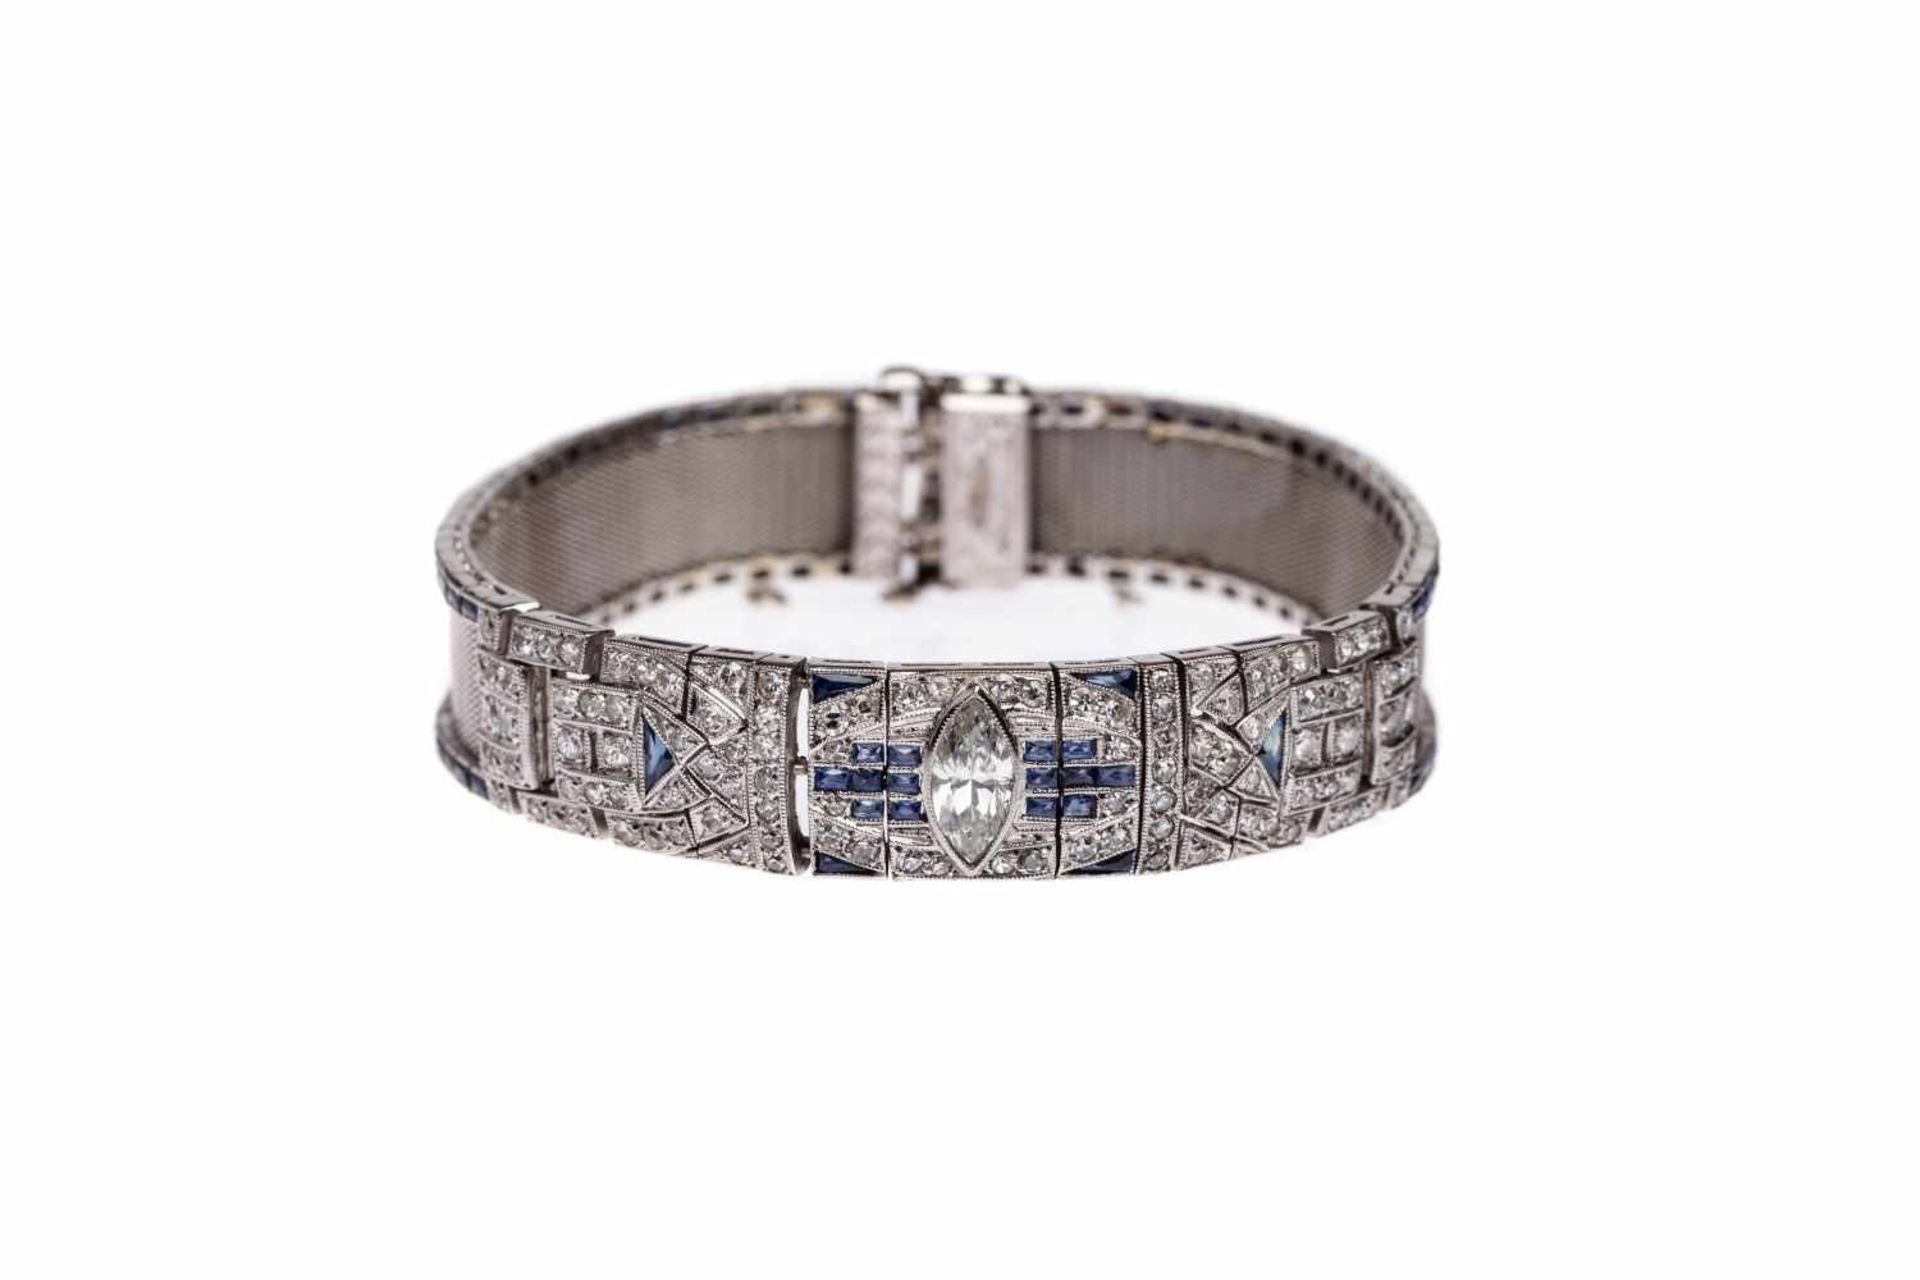 BraceletPlatinum Bracelet 950 /000fine, with a marquise cut diamond approx. 0.6 ct, and octagonal